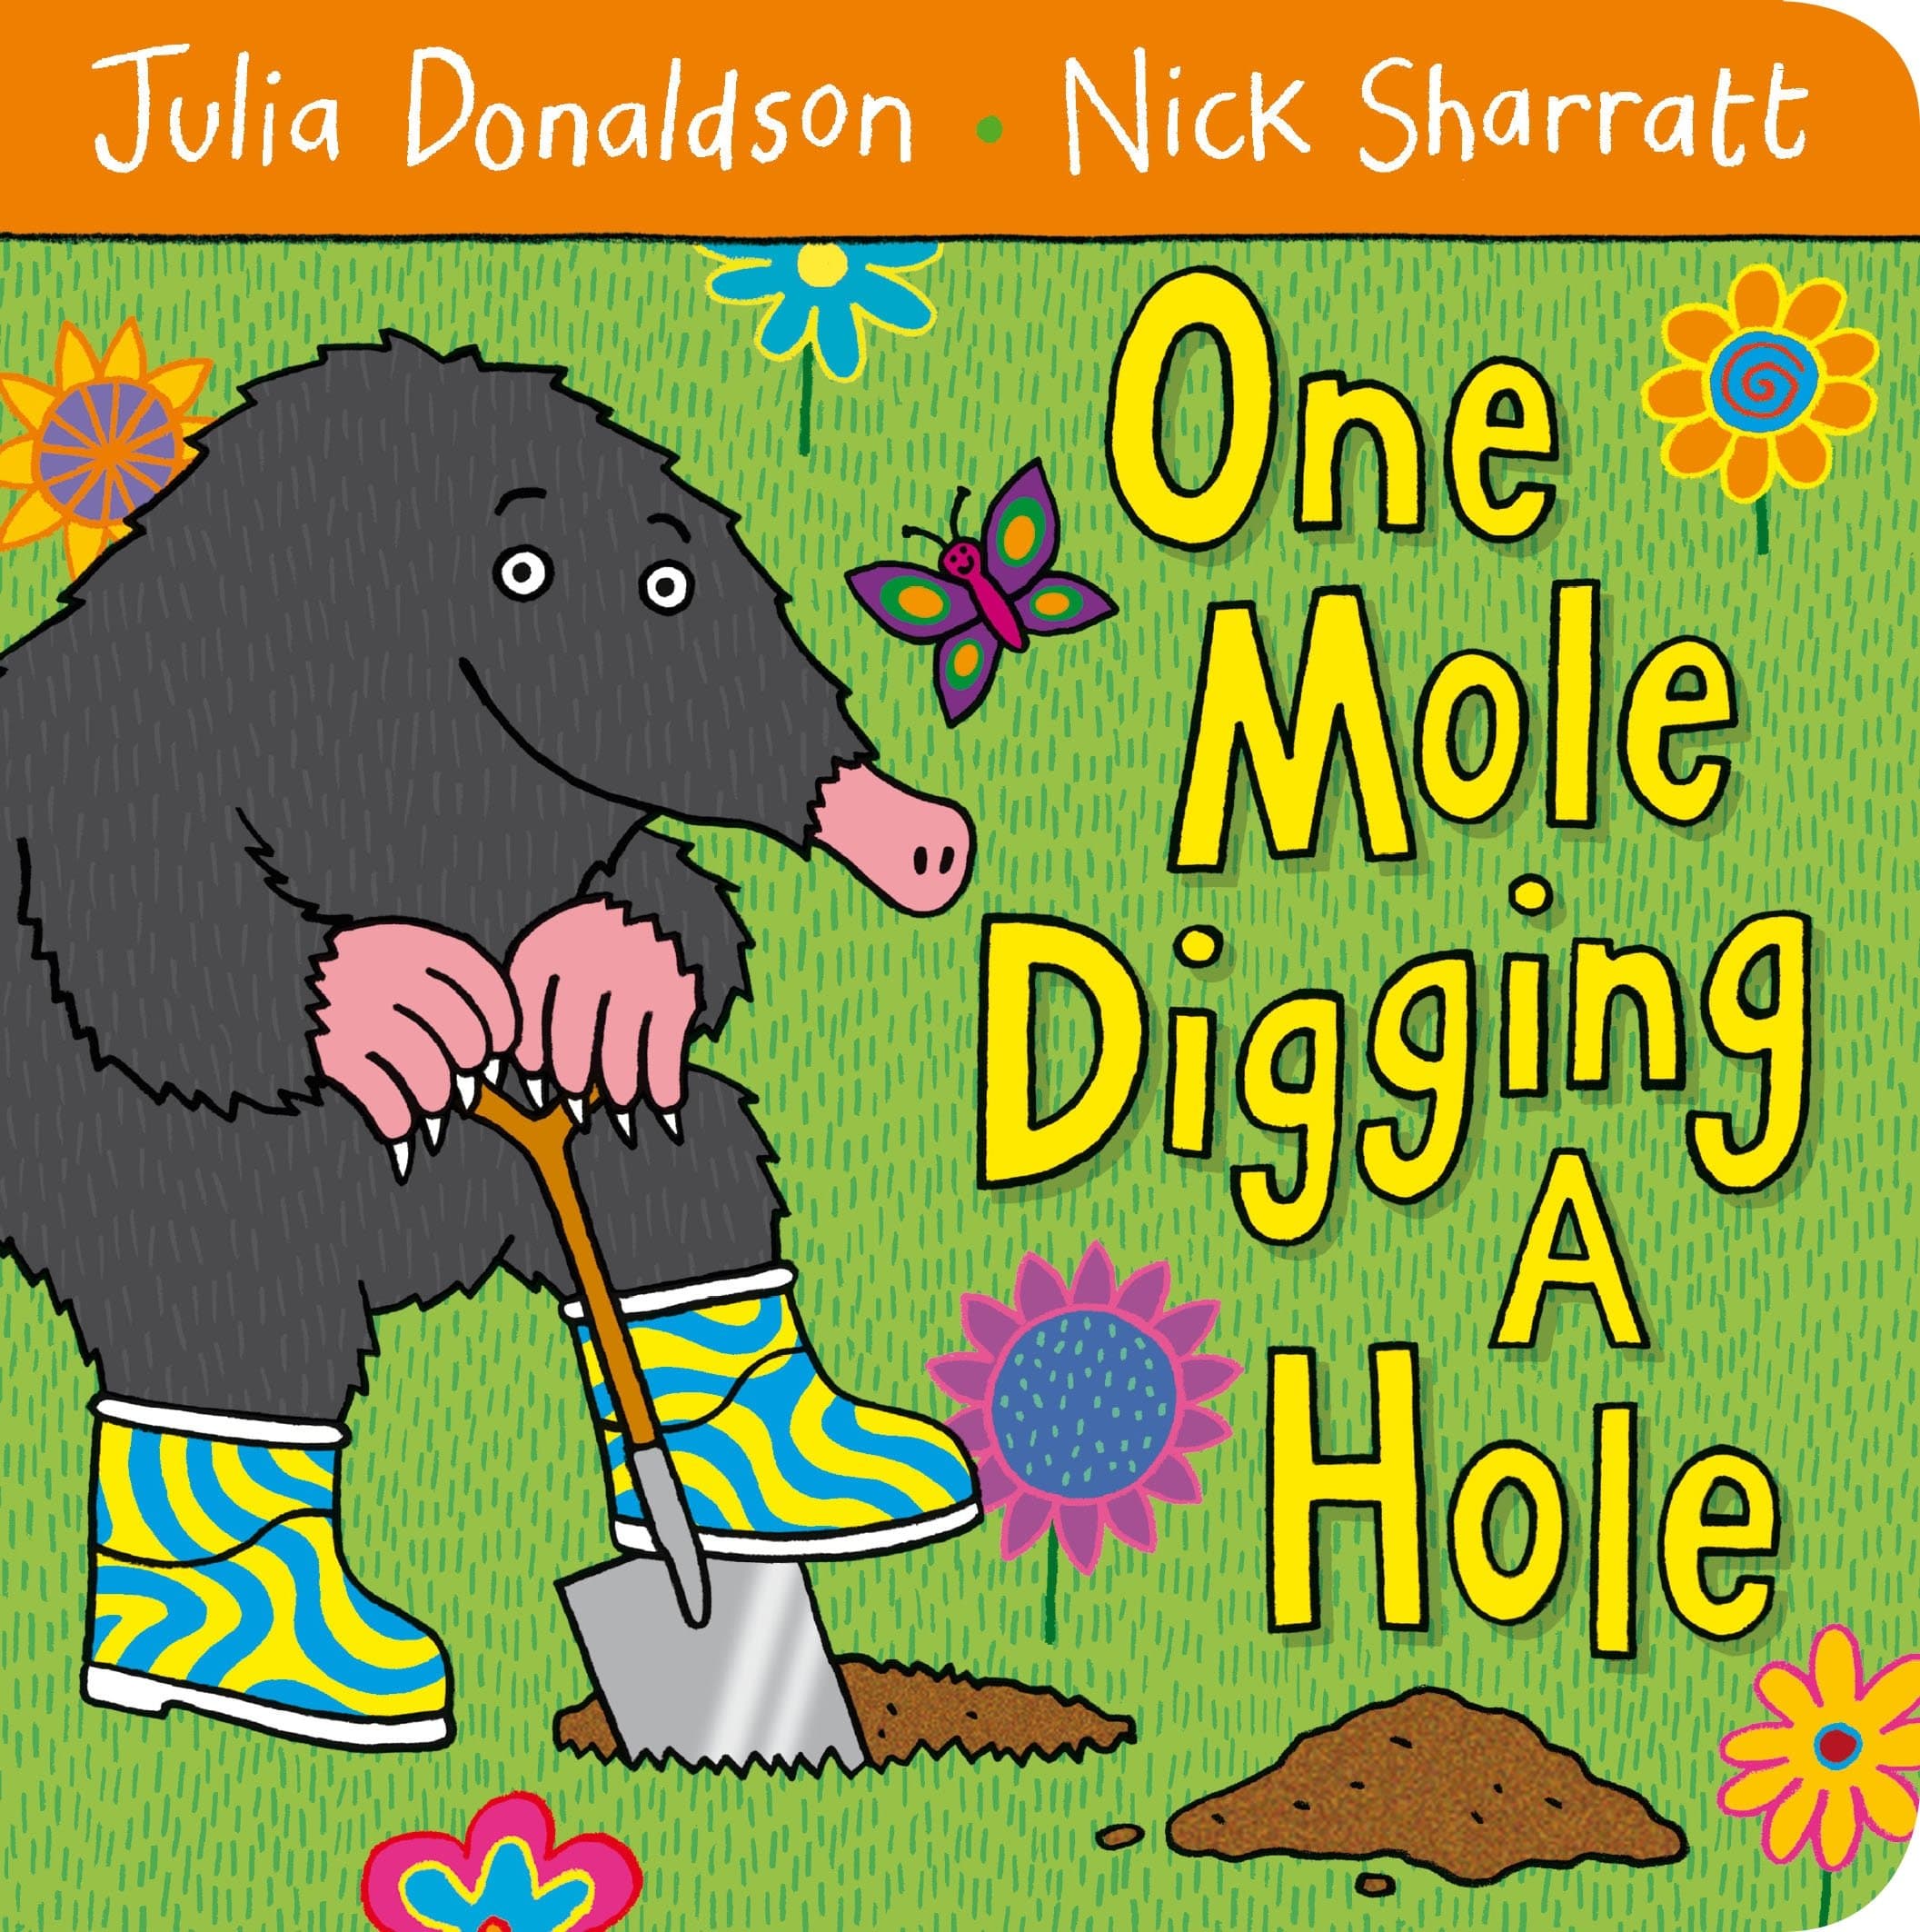 IMG : One Mole digging a hole